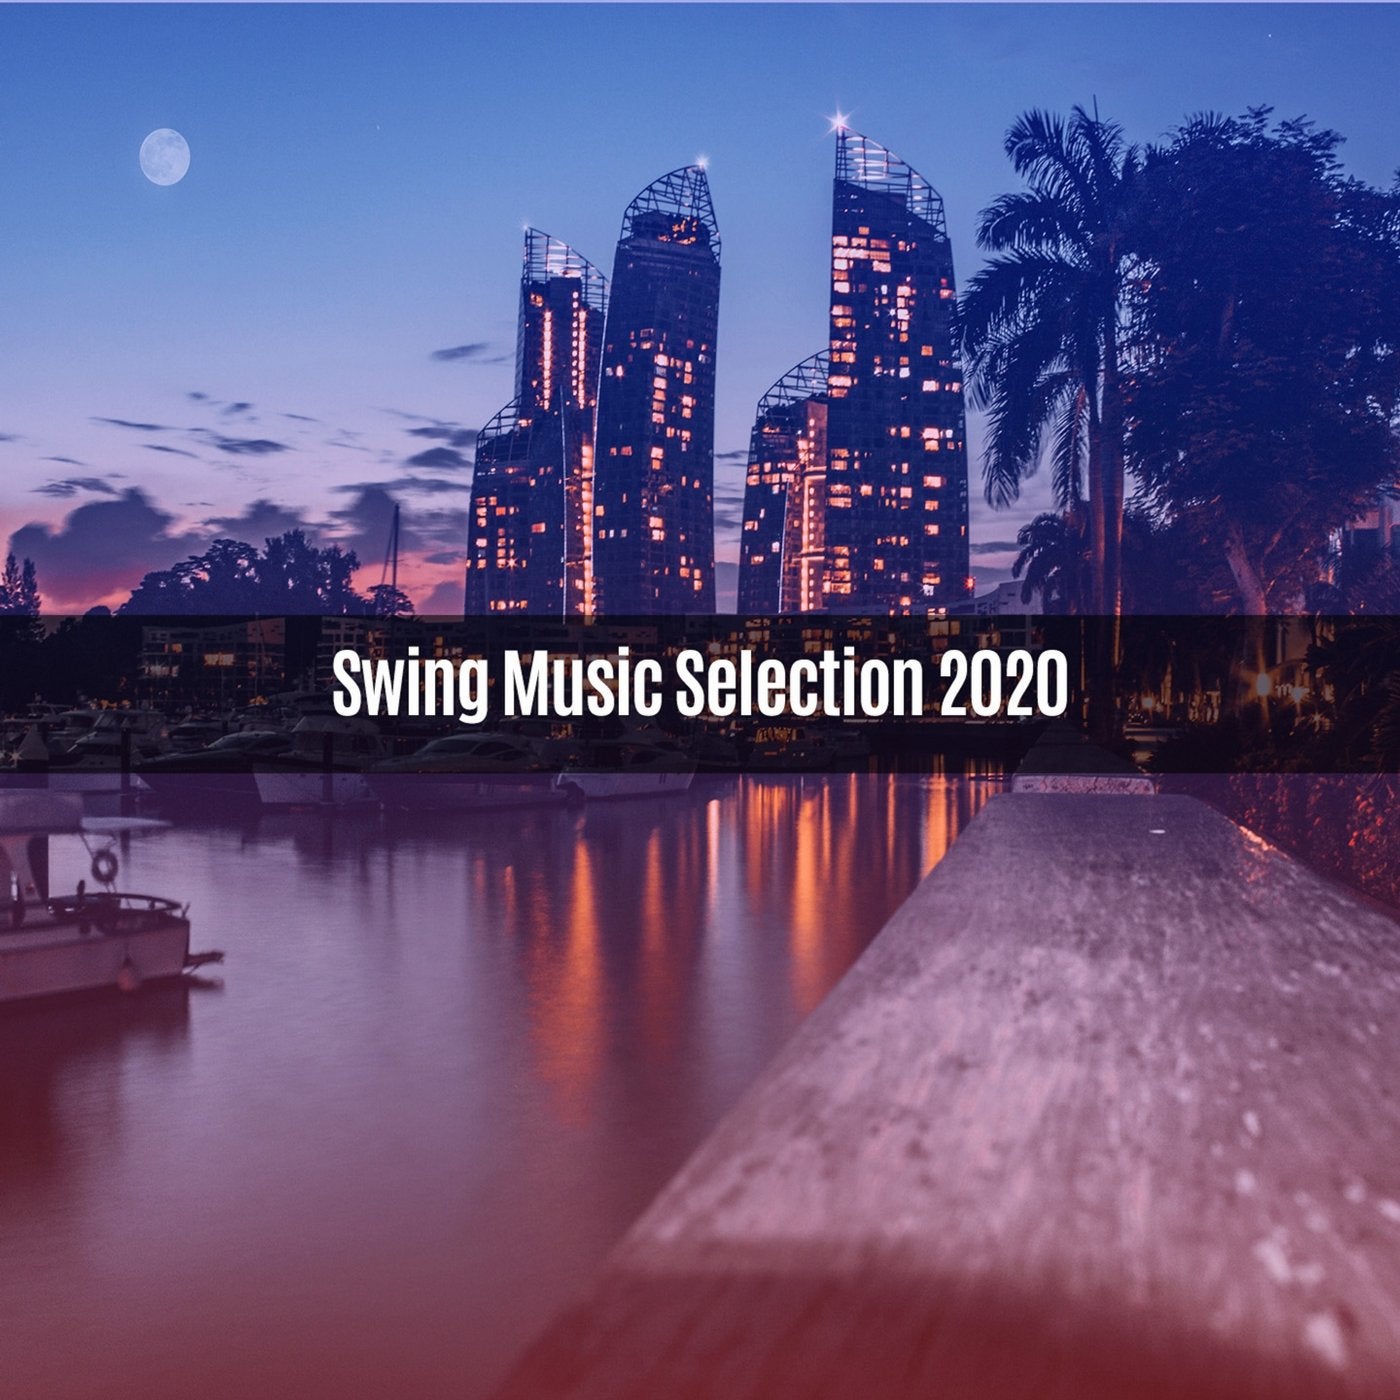 SWING MUSIC SELECTION 2020